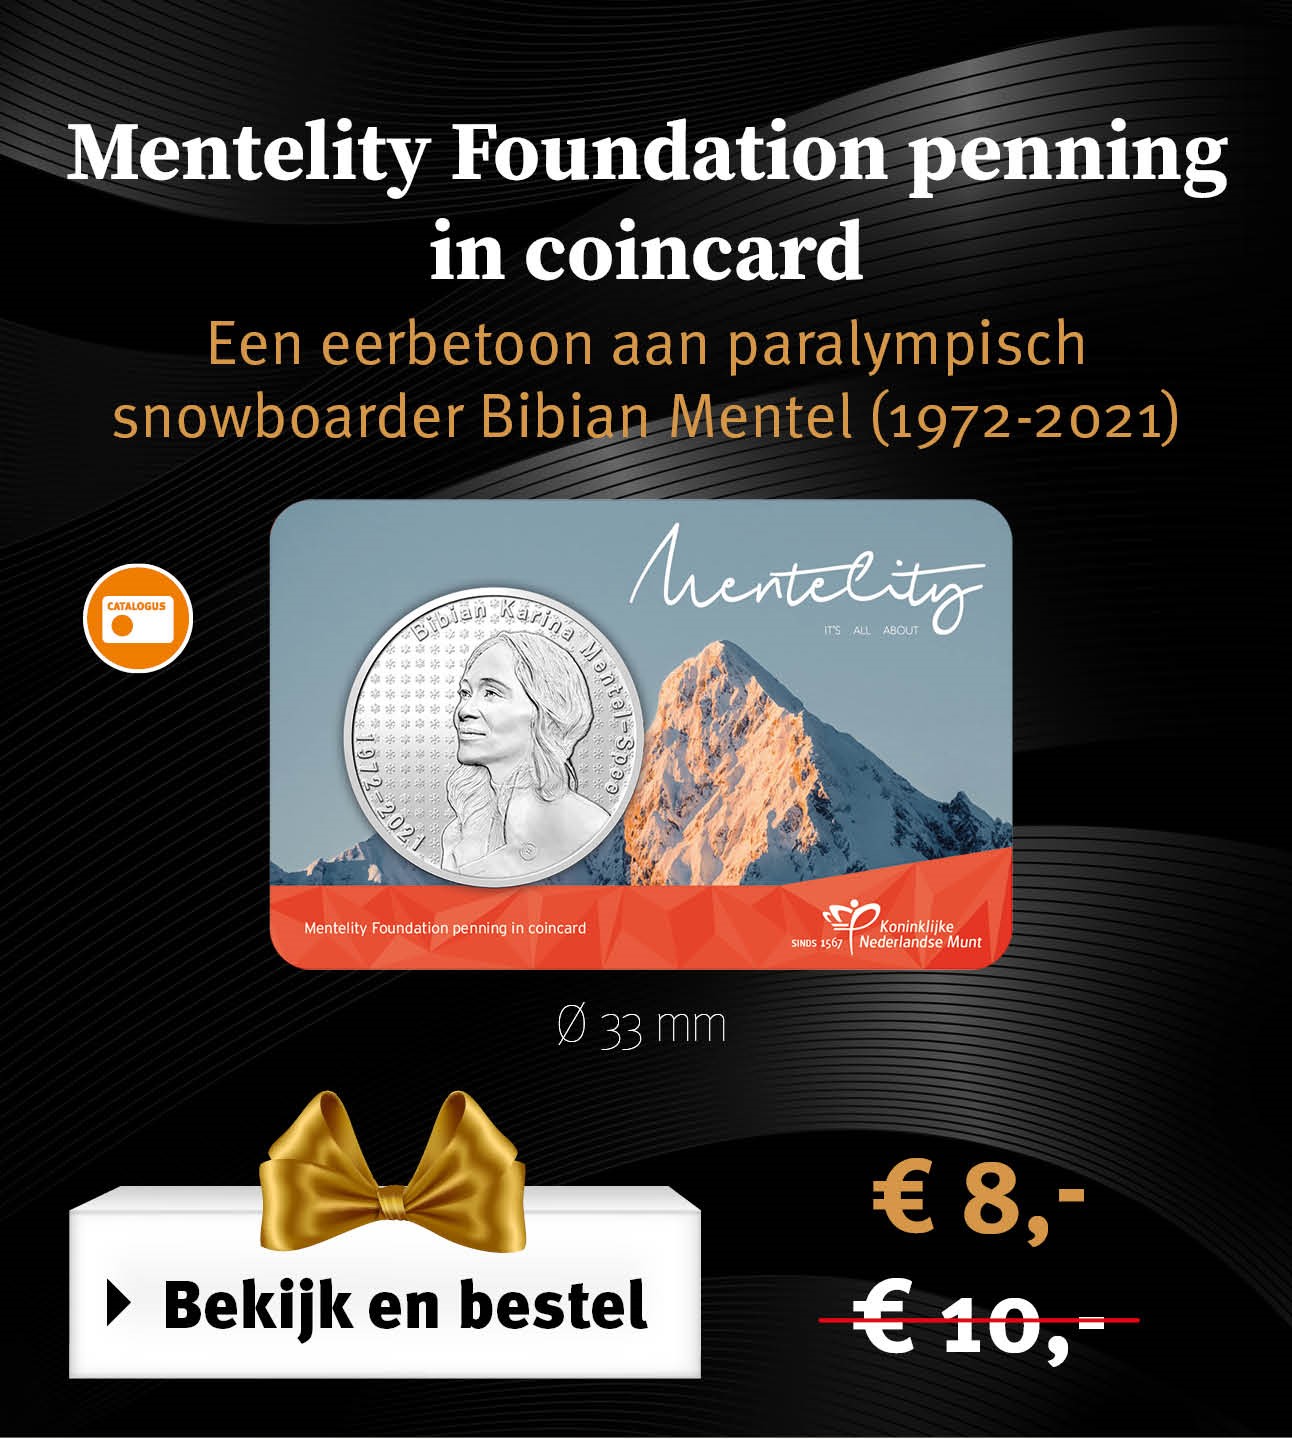 Bekijk en bestel: Mentelity Foundation penning in coincard